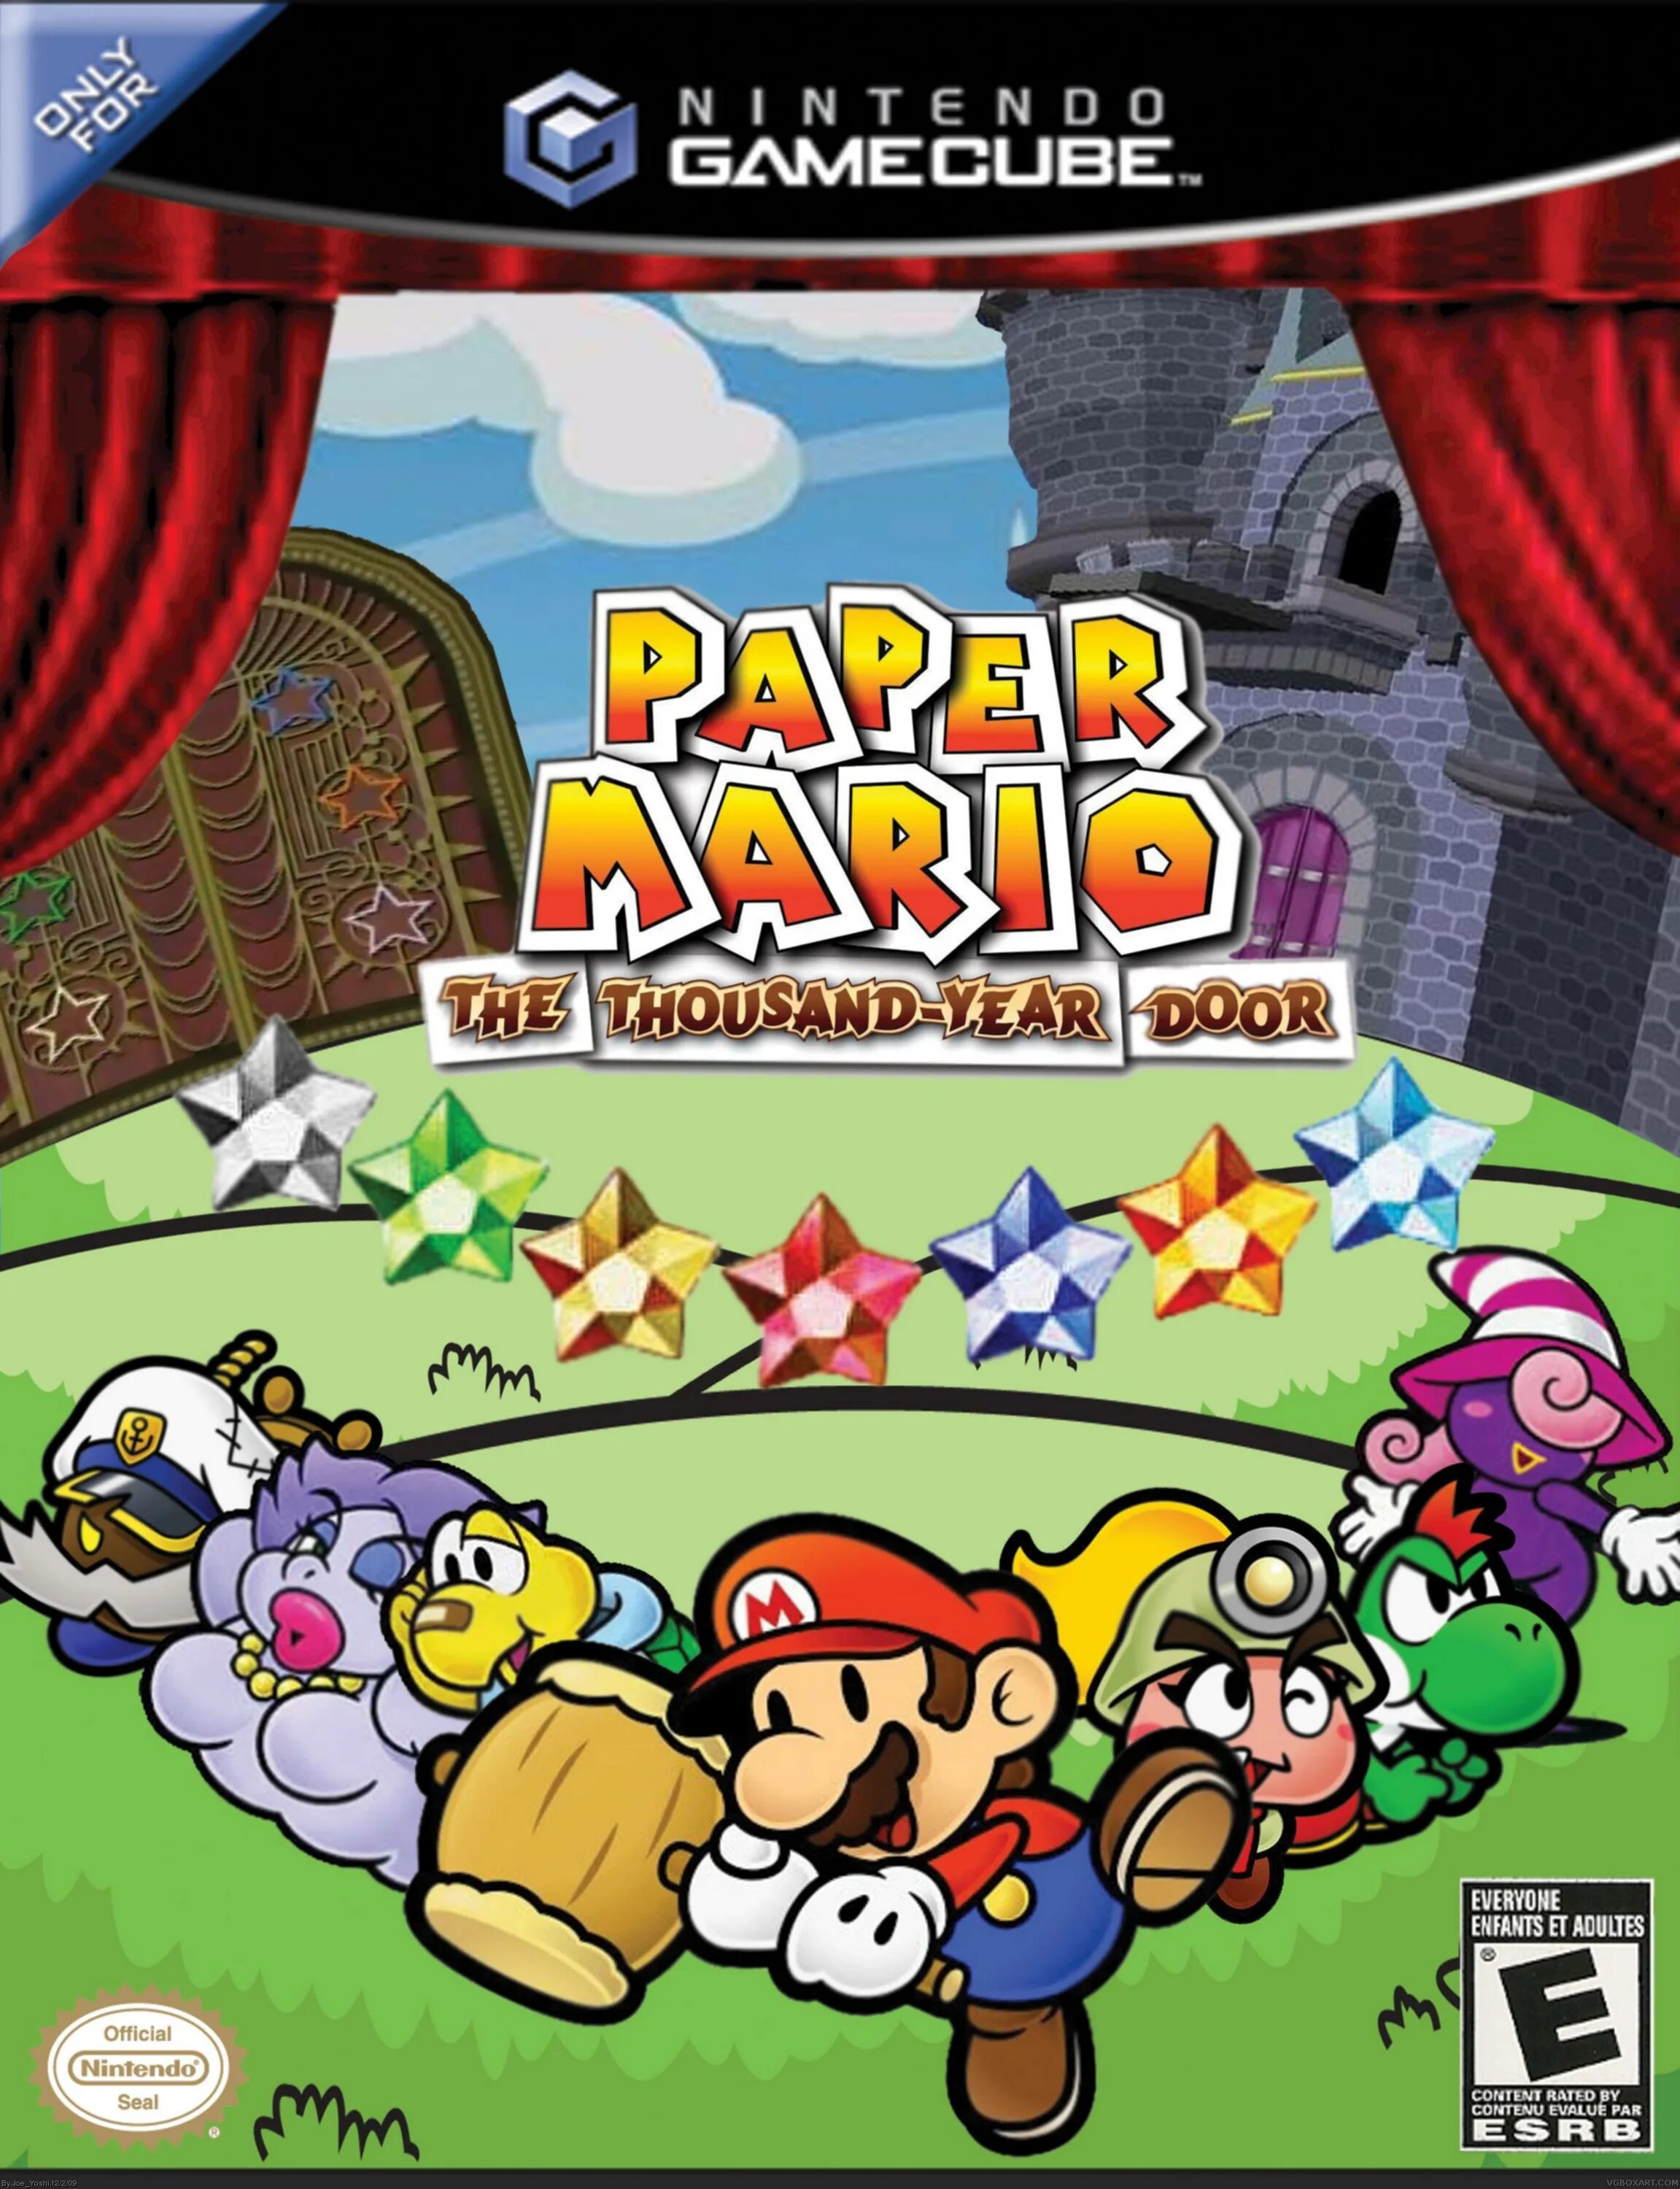 Mario the thousand year door. Paper Mario GAMECUBE. Paper Mario: the Thousand-year Door. Paper Mario GAMECUBE обложка. Mario 1000 year Door.